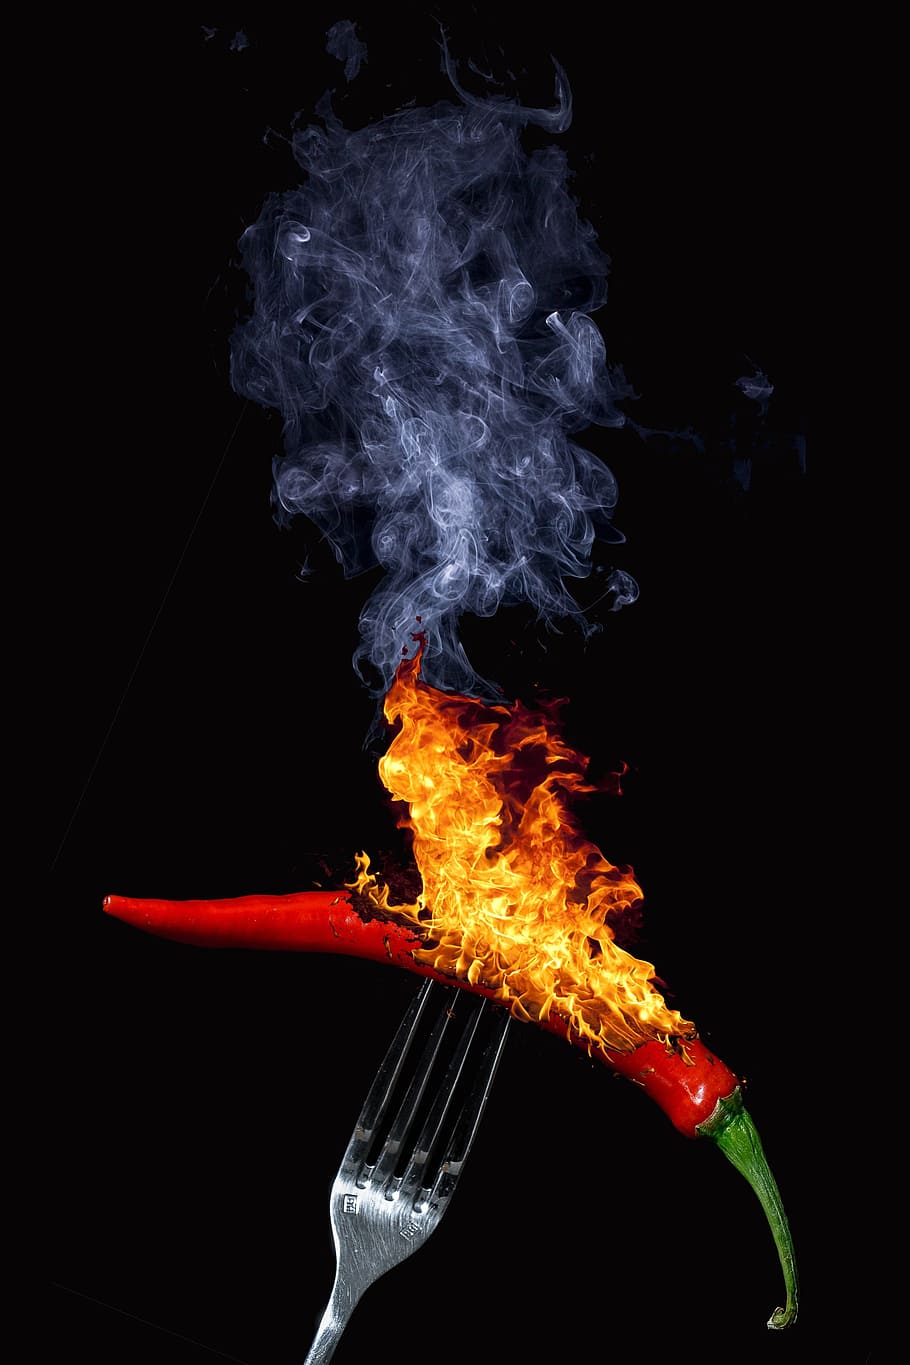 chili, gray, fork, pepper, sharp, flare-up, burn, hot, smoke, black background